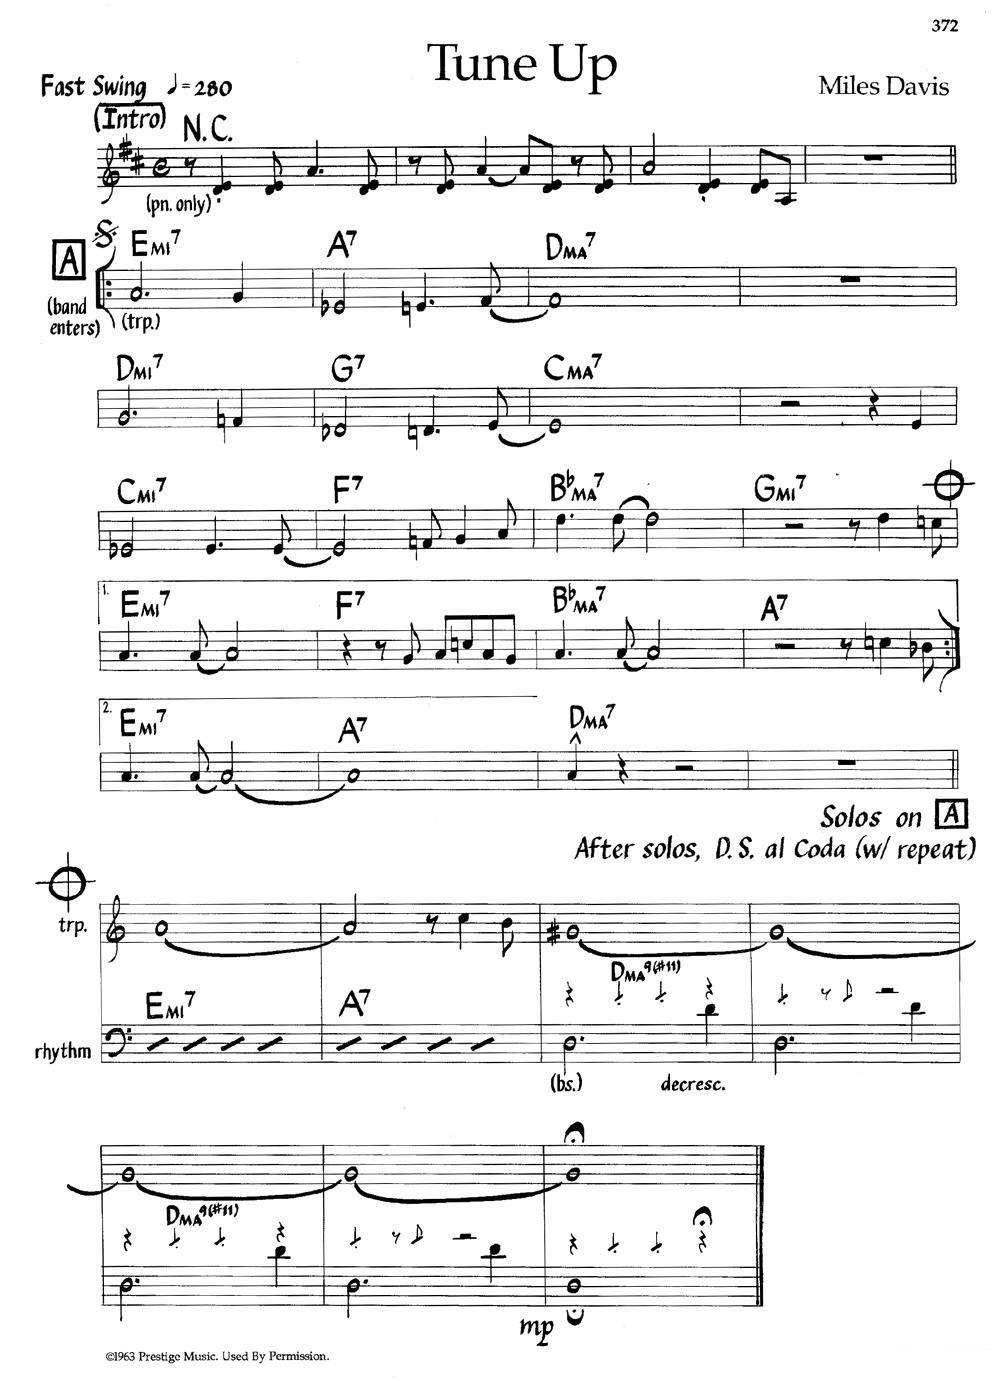 《Tune Up》钢琴曲谱图分享